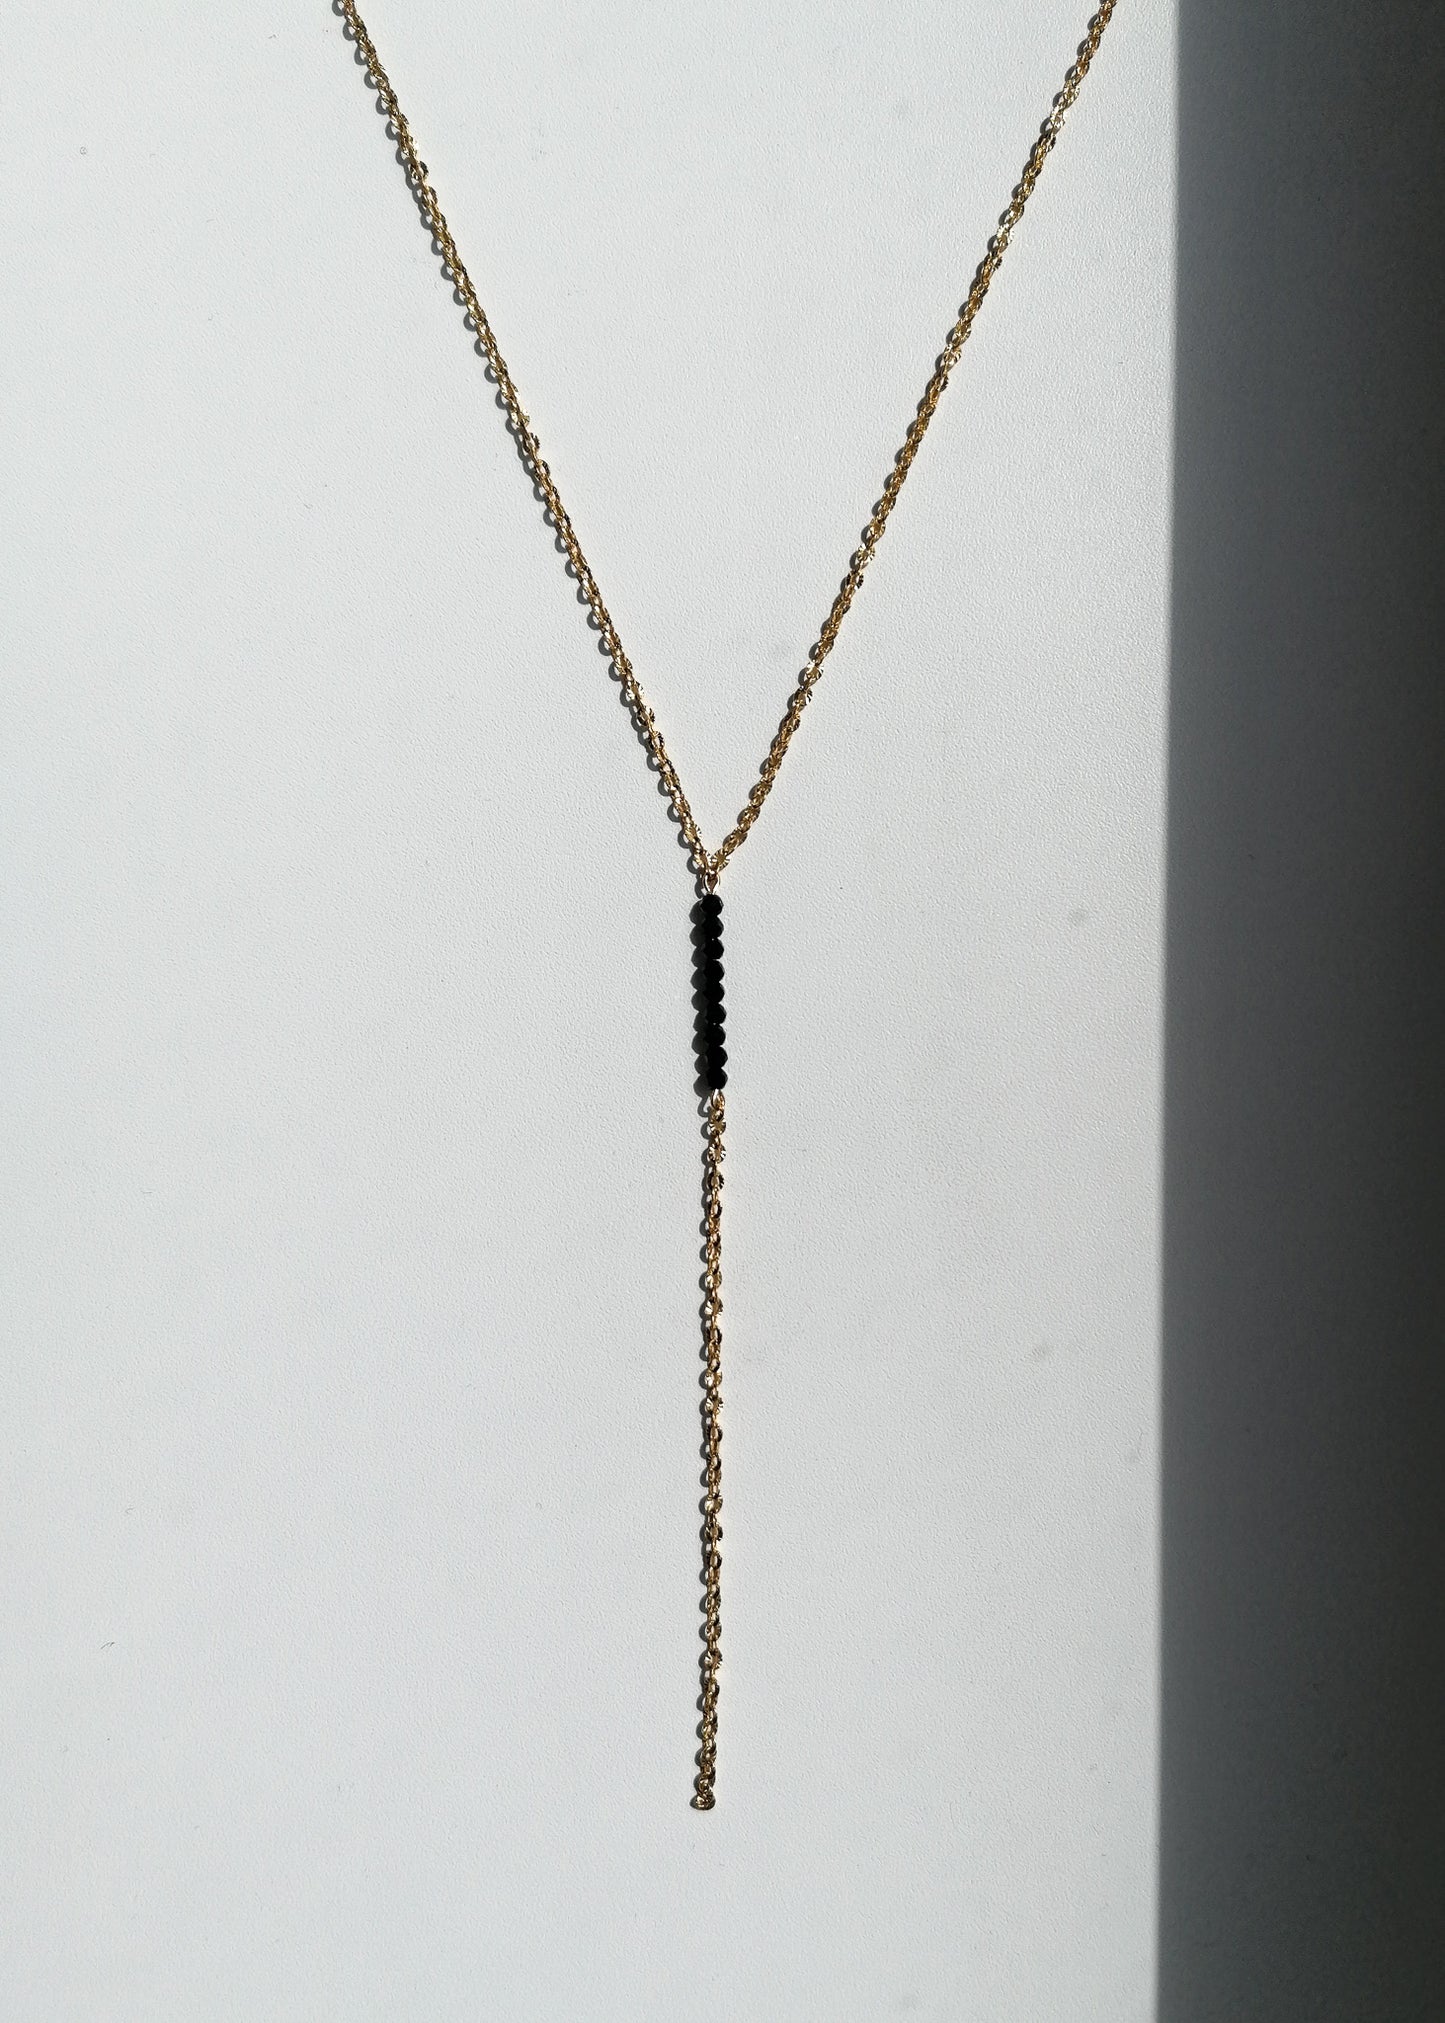 Vera necklace - black spinel